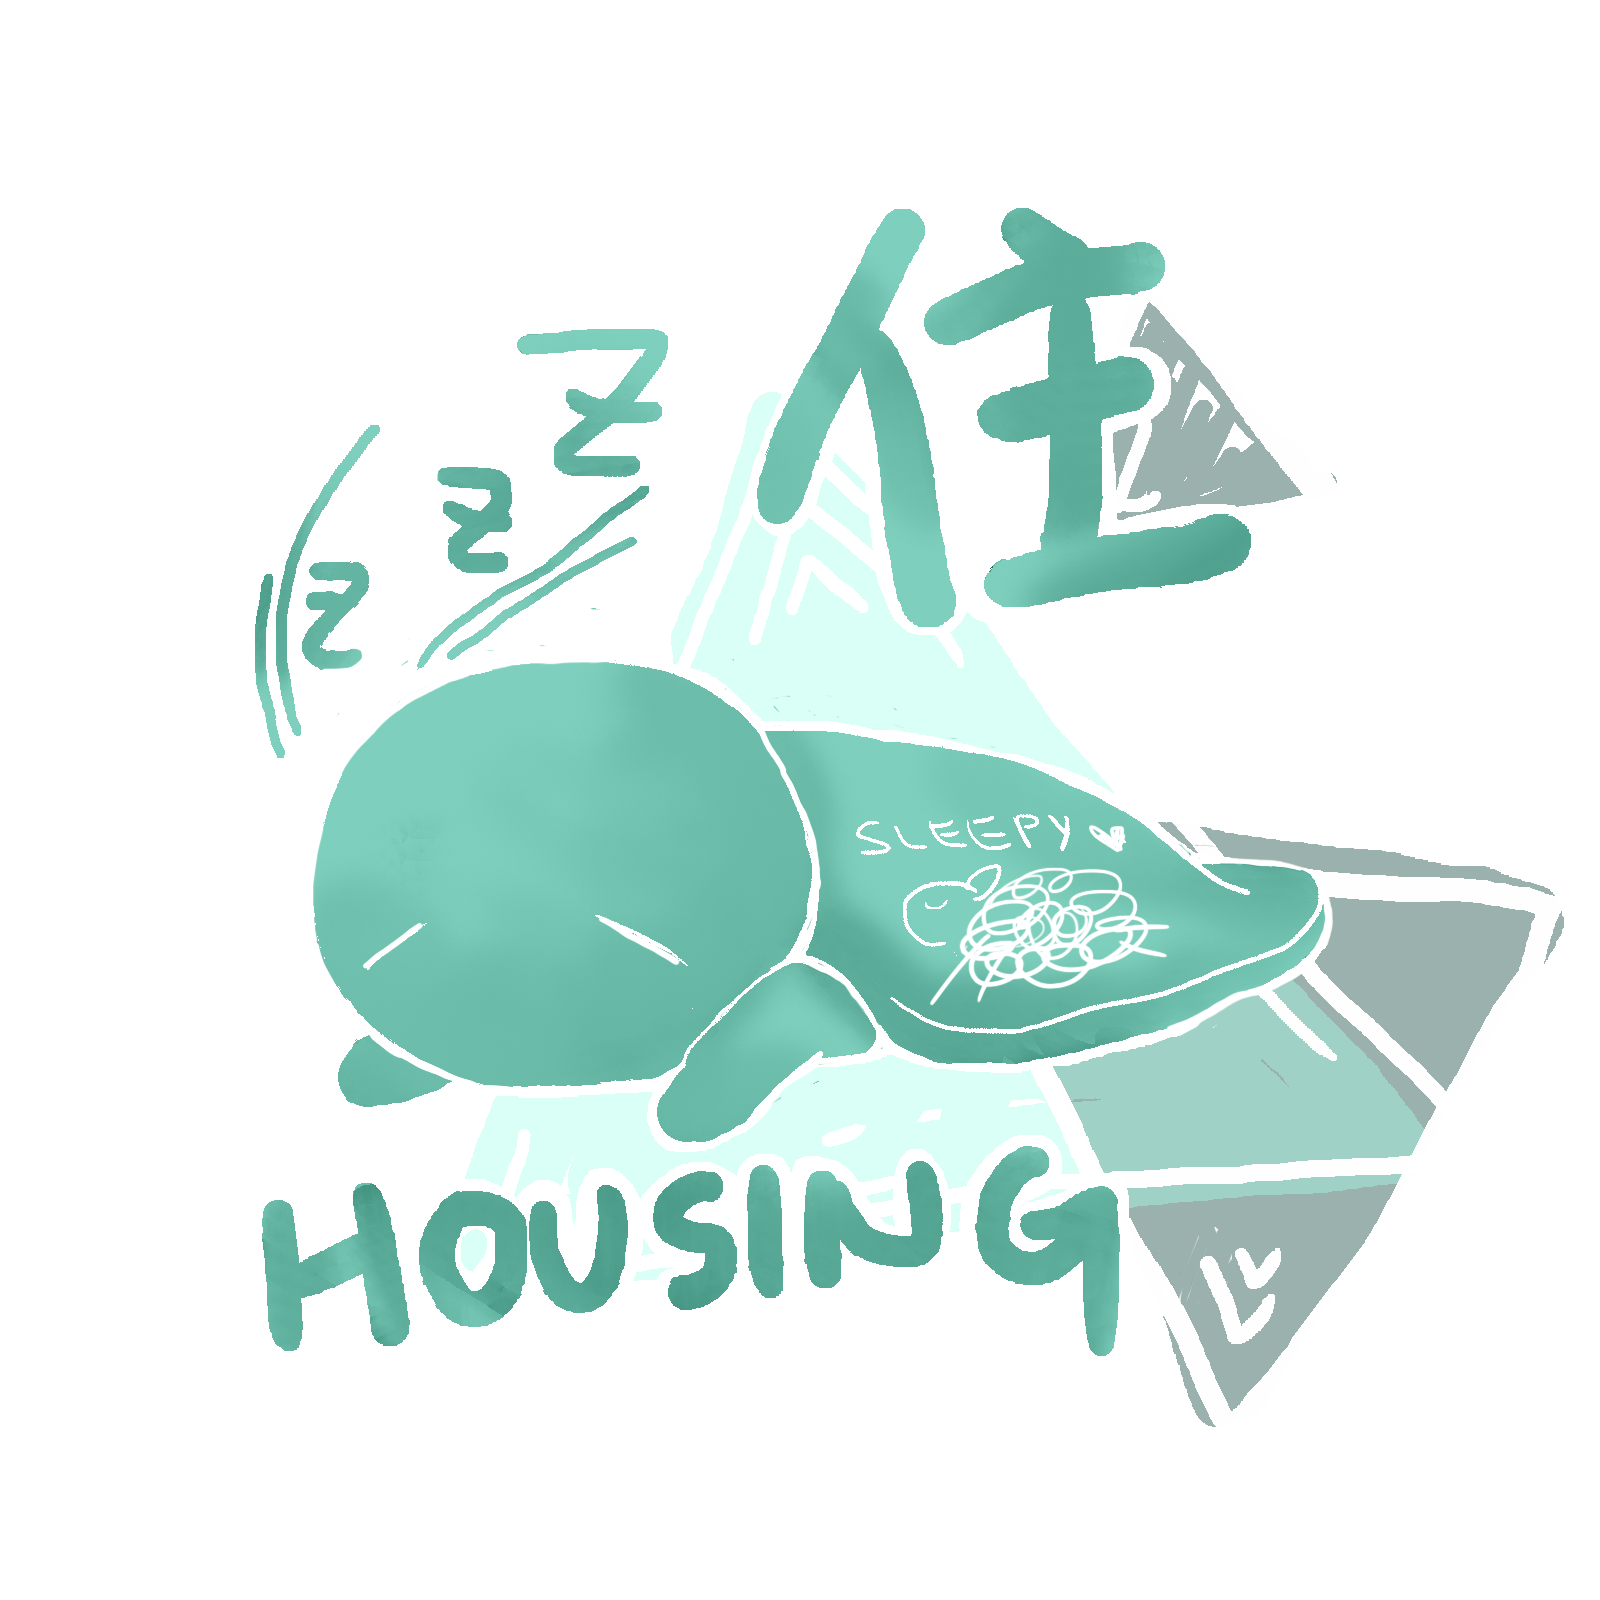 housing